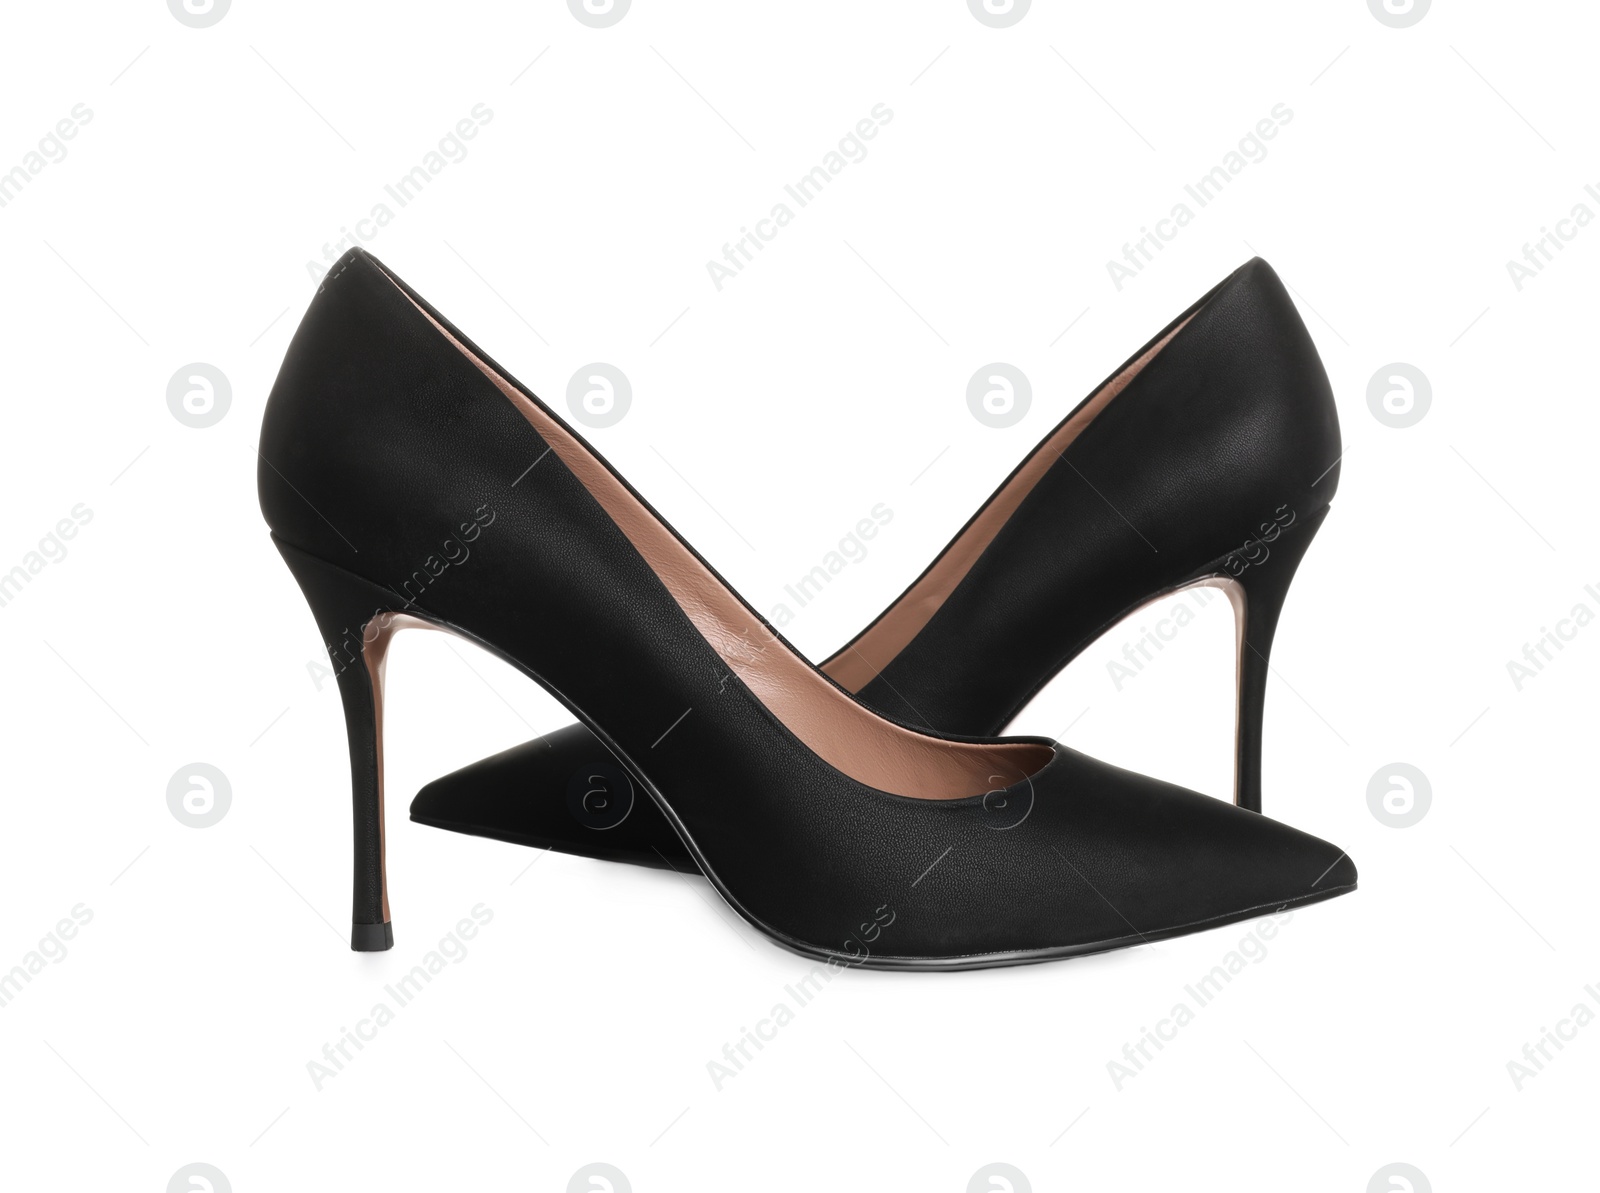 Photo of Pair of elegant black high heel shoes on white background